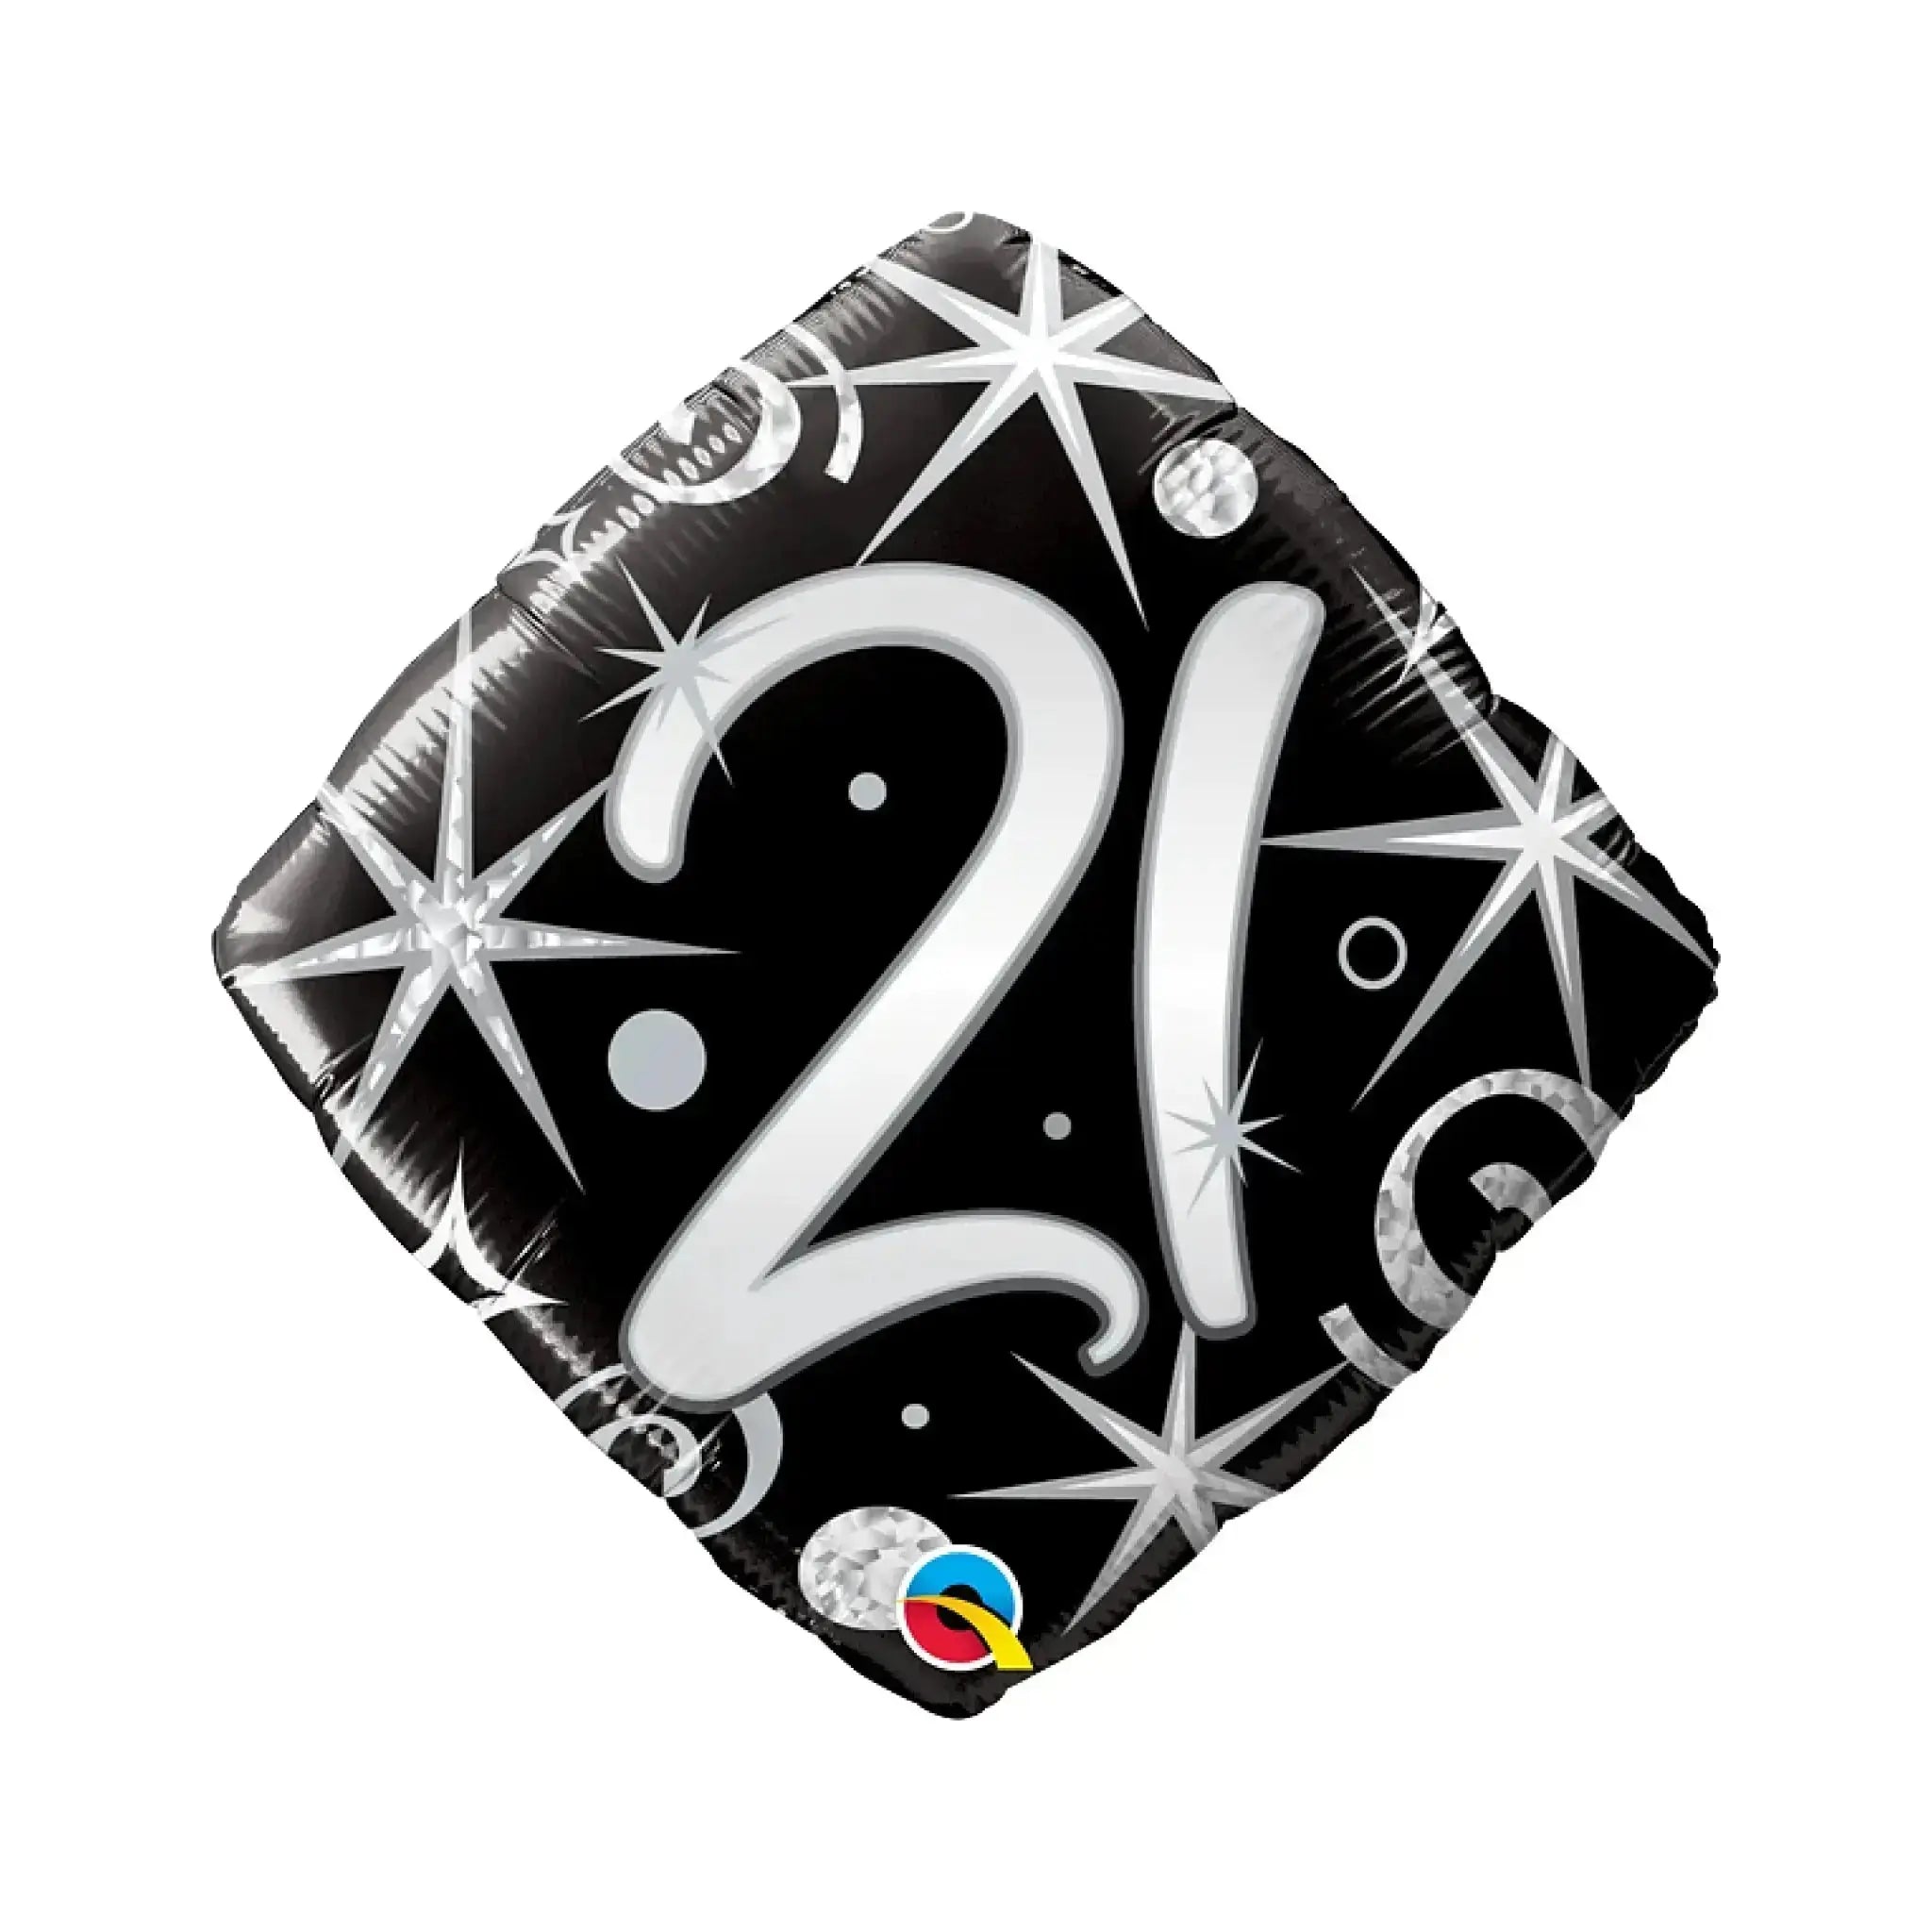 21st Birthday Balloon (Black Sparkle) | The Party Hut